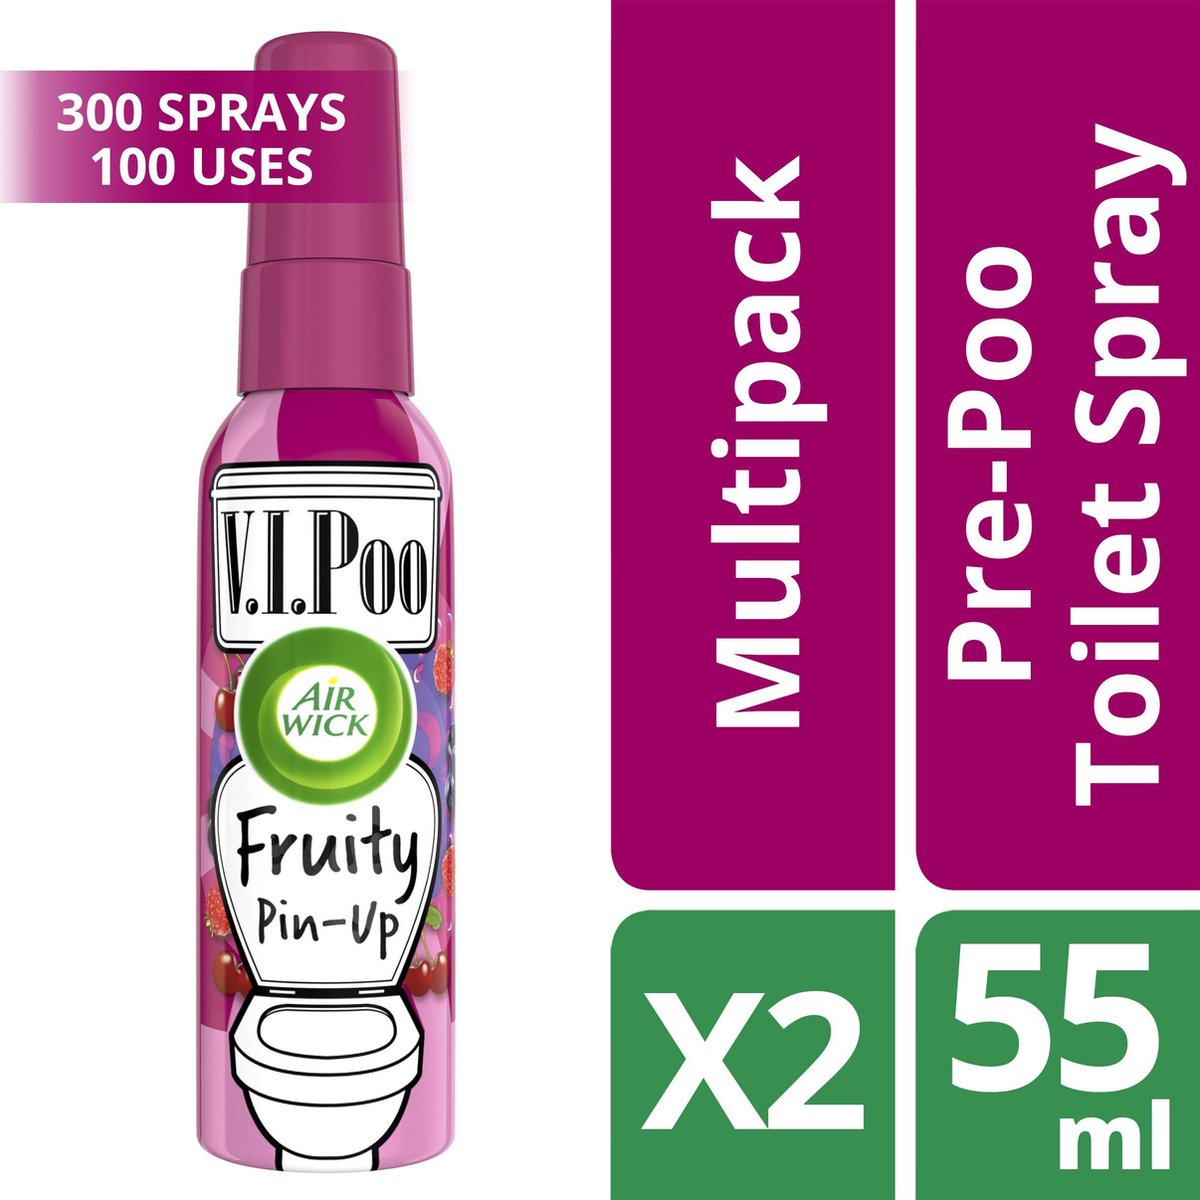 Rafraîchisseur de toilette Fruity Pin-Up Air Wick VIPoo - 2 x 55 ml